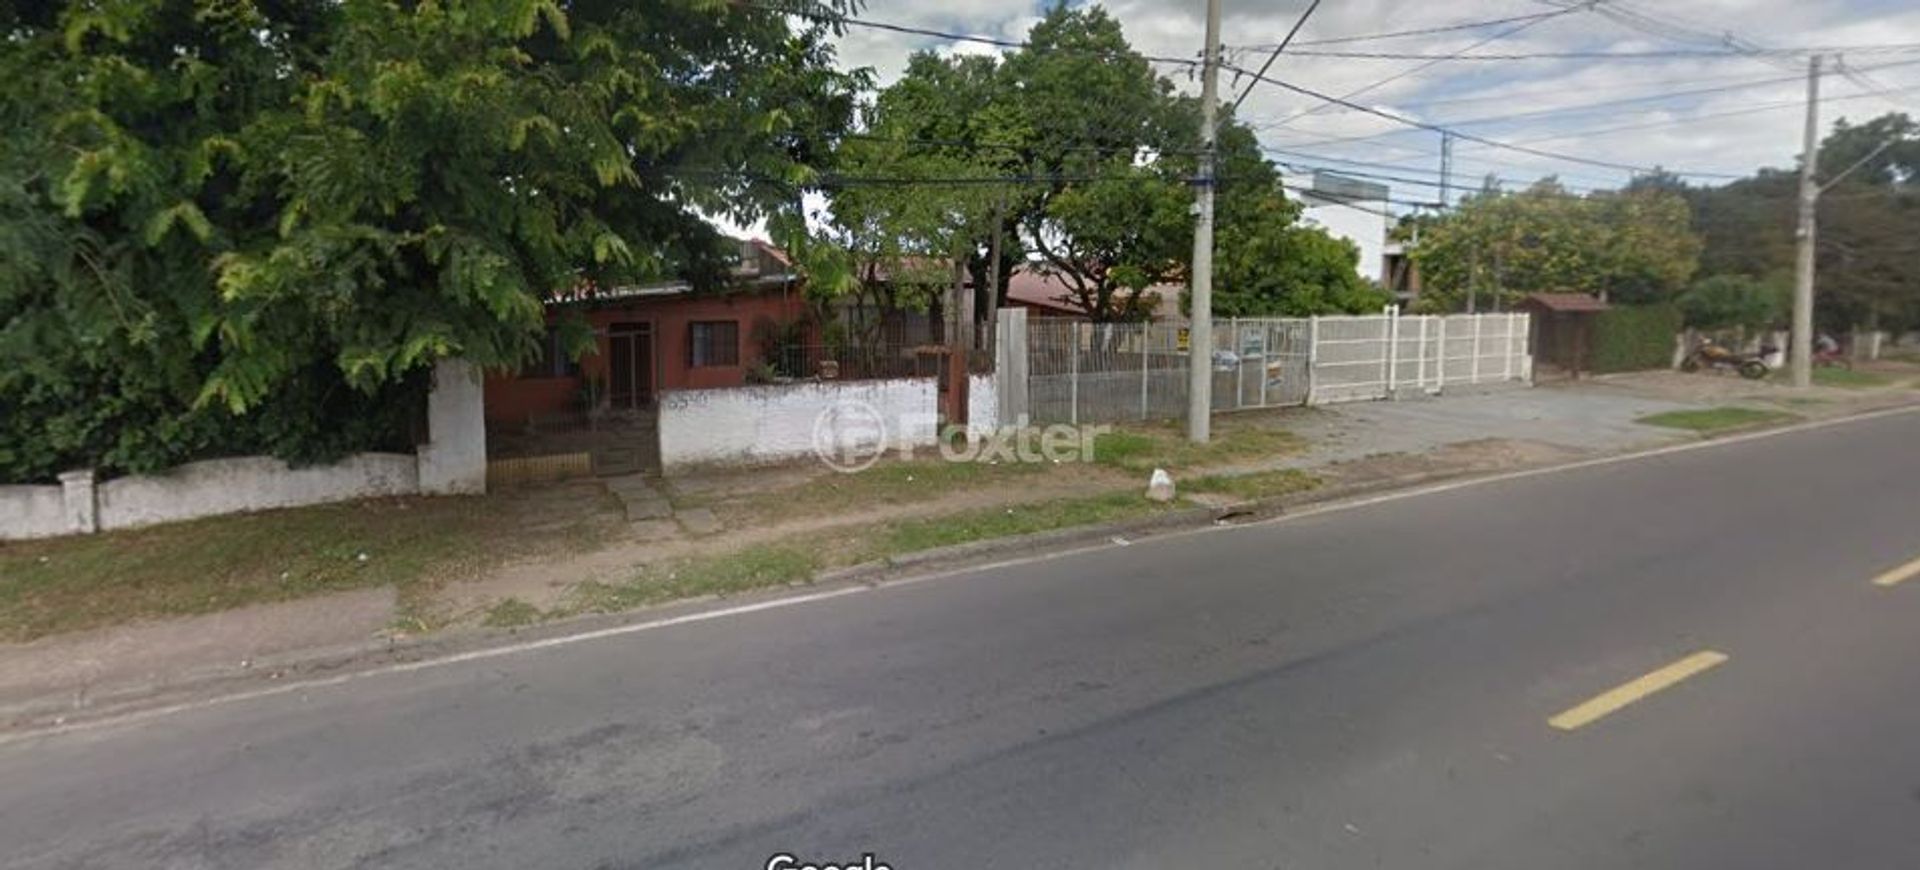 Terreno à venda Avenida da Cavalhada, Cavalhada - Porto Alegre